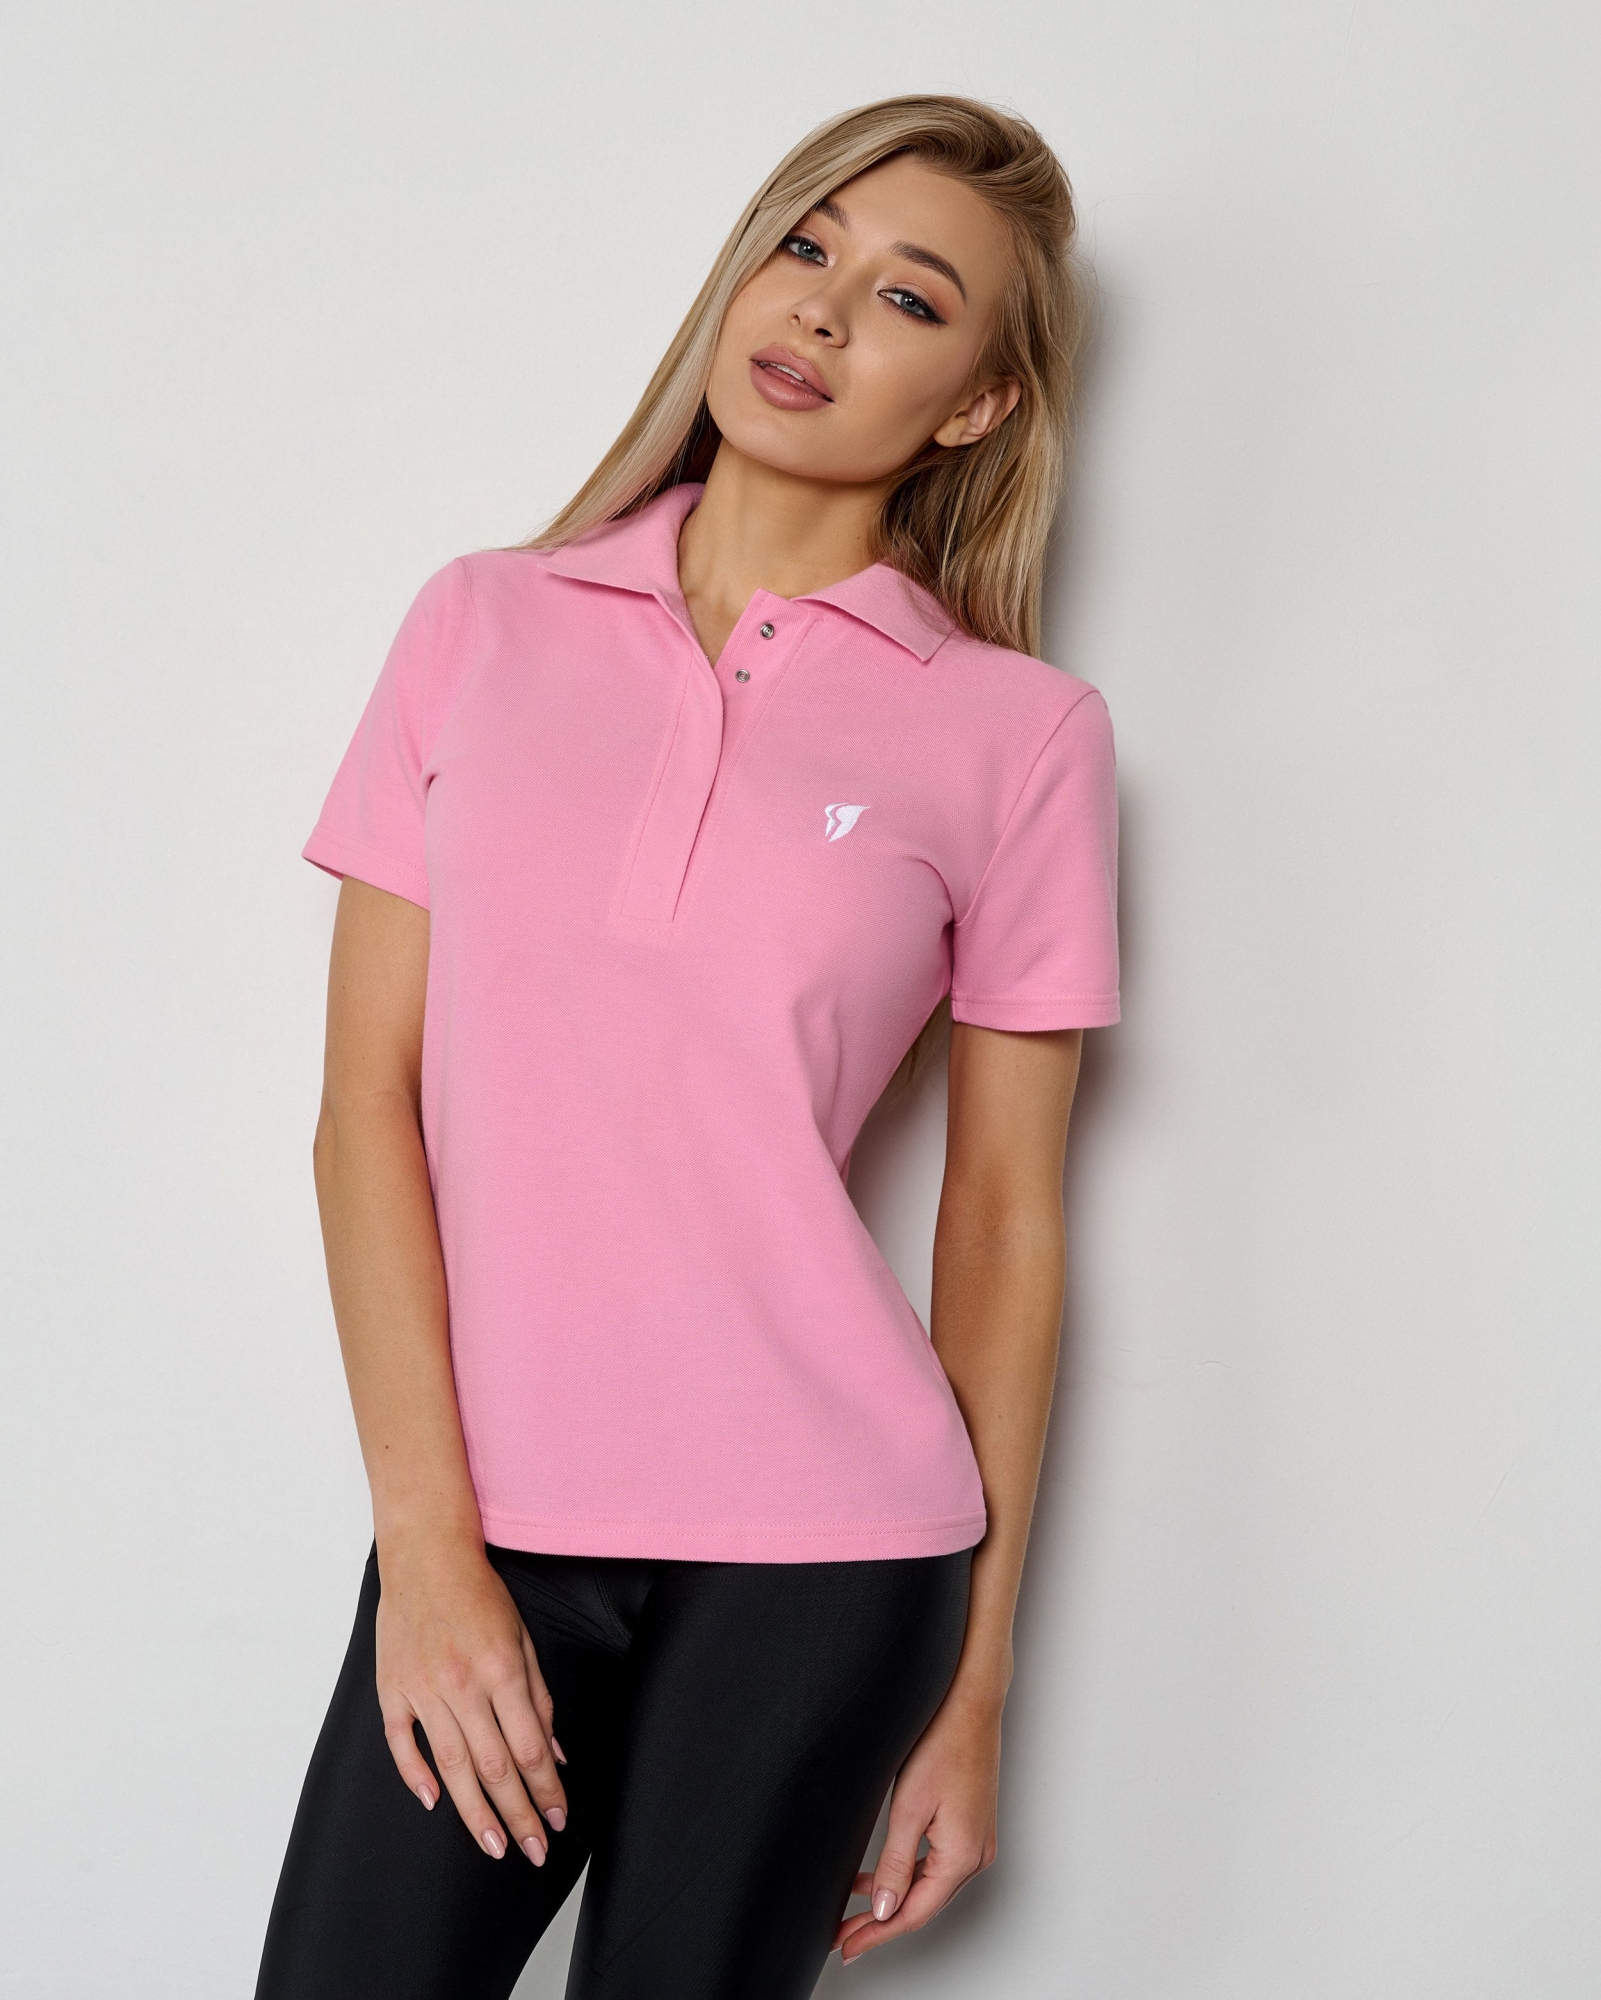 Bona Fide: T-Shirt Polo "Baby Pink" фото 2